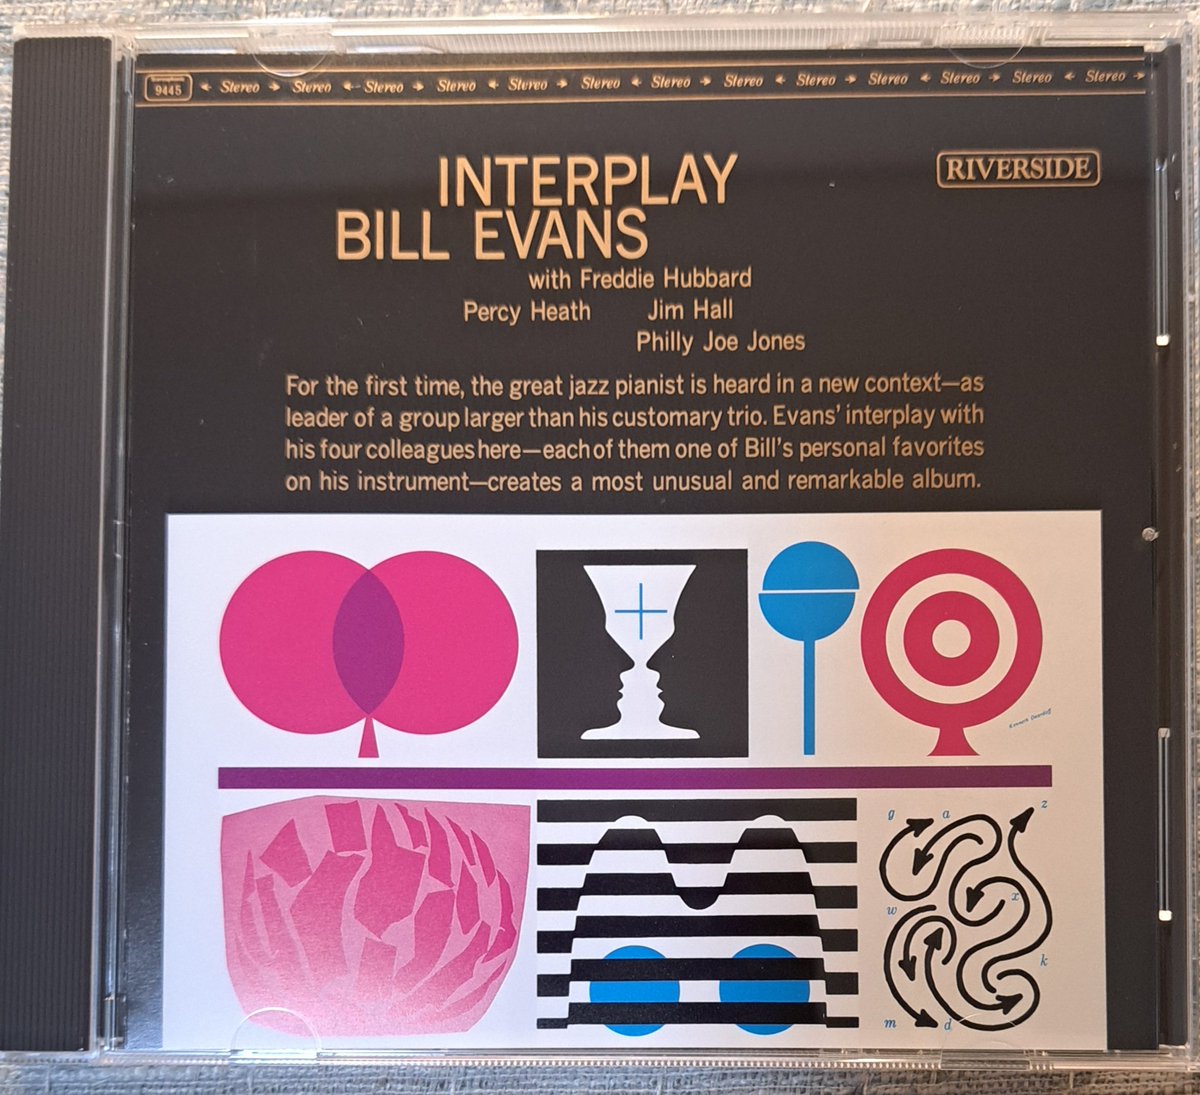 Bill Evans   INTERPLAY なかなか良いピアノも最高このCD 良いなぁ
#BILLEVANS